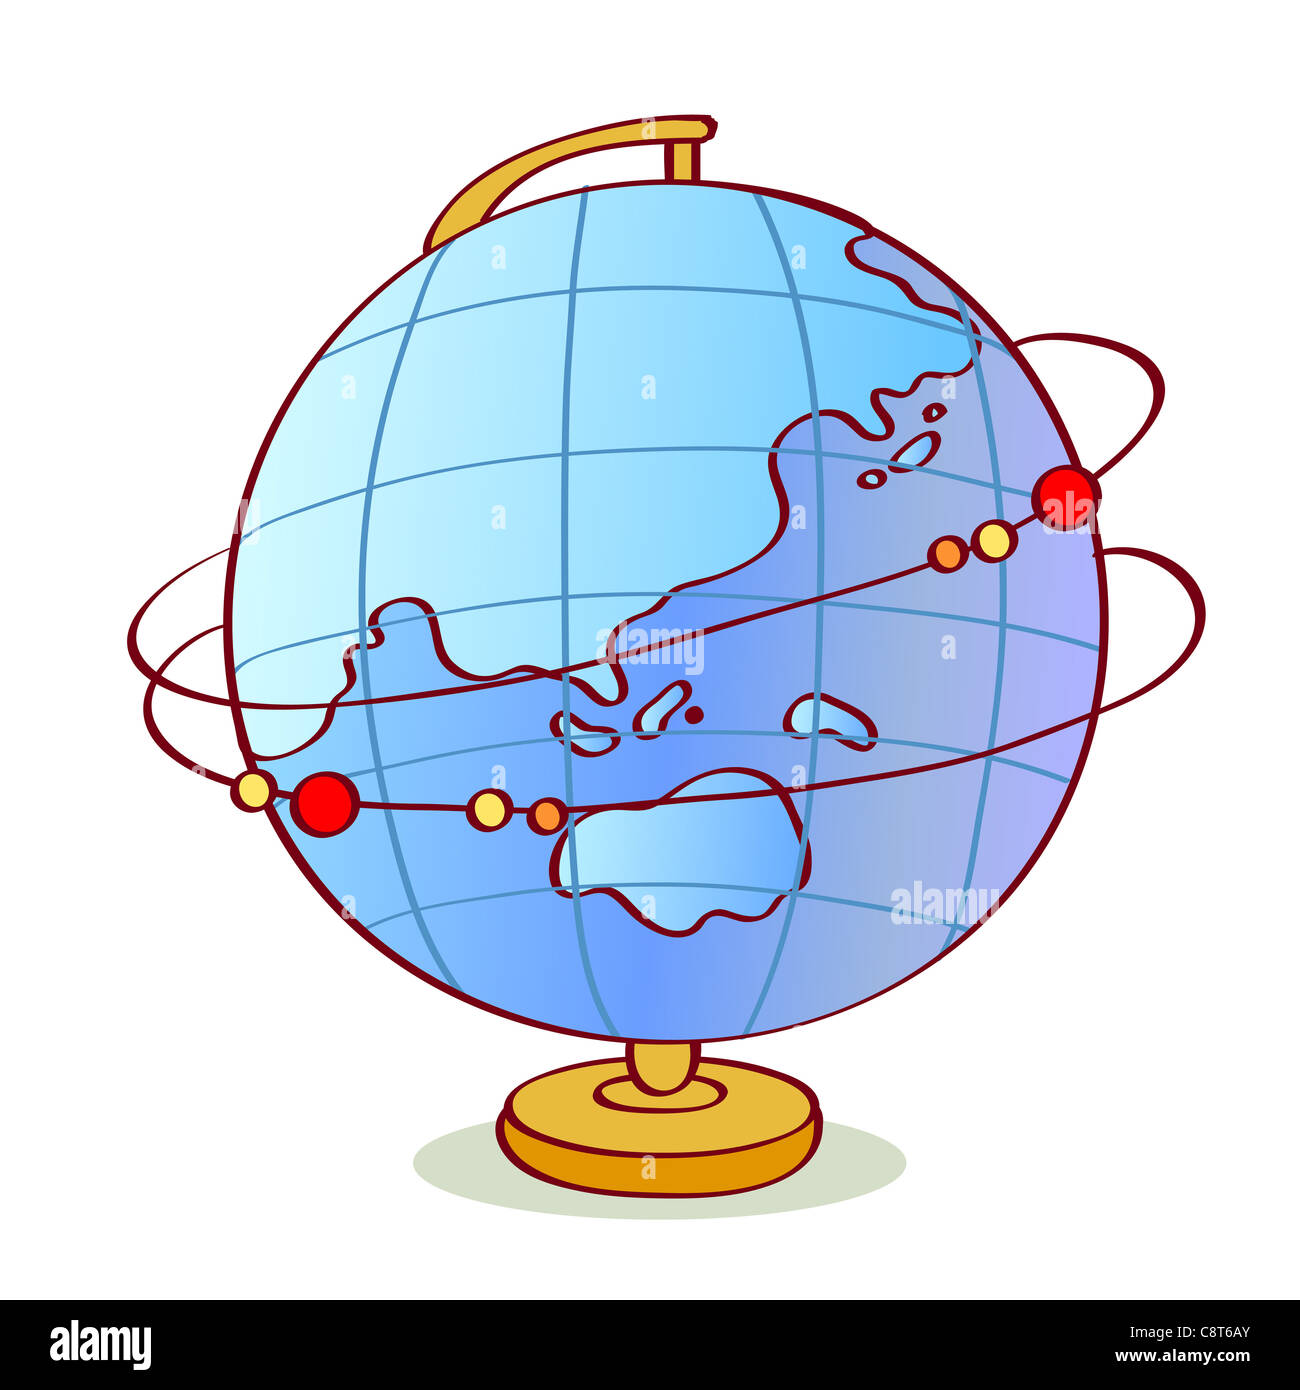 Illustration of desktop globe Stock Photo